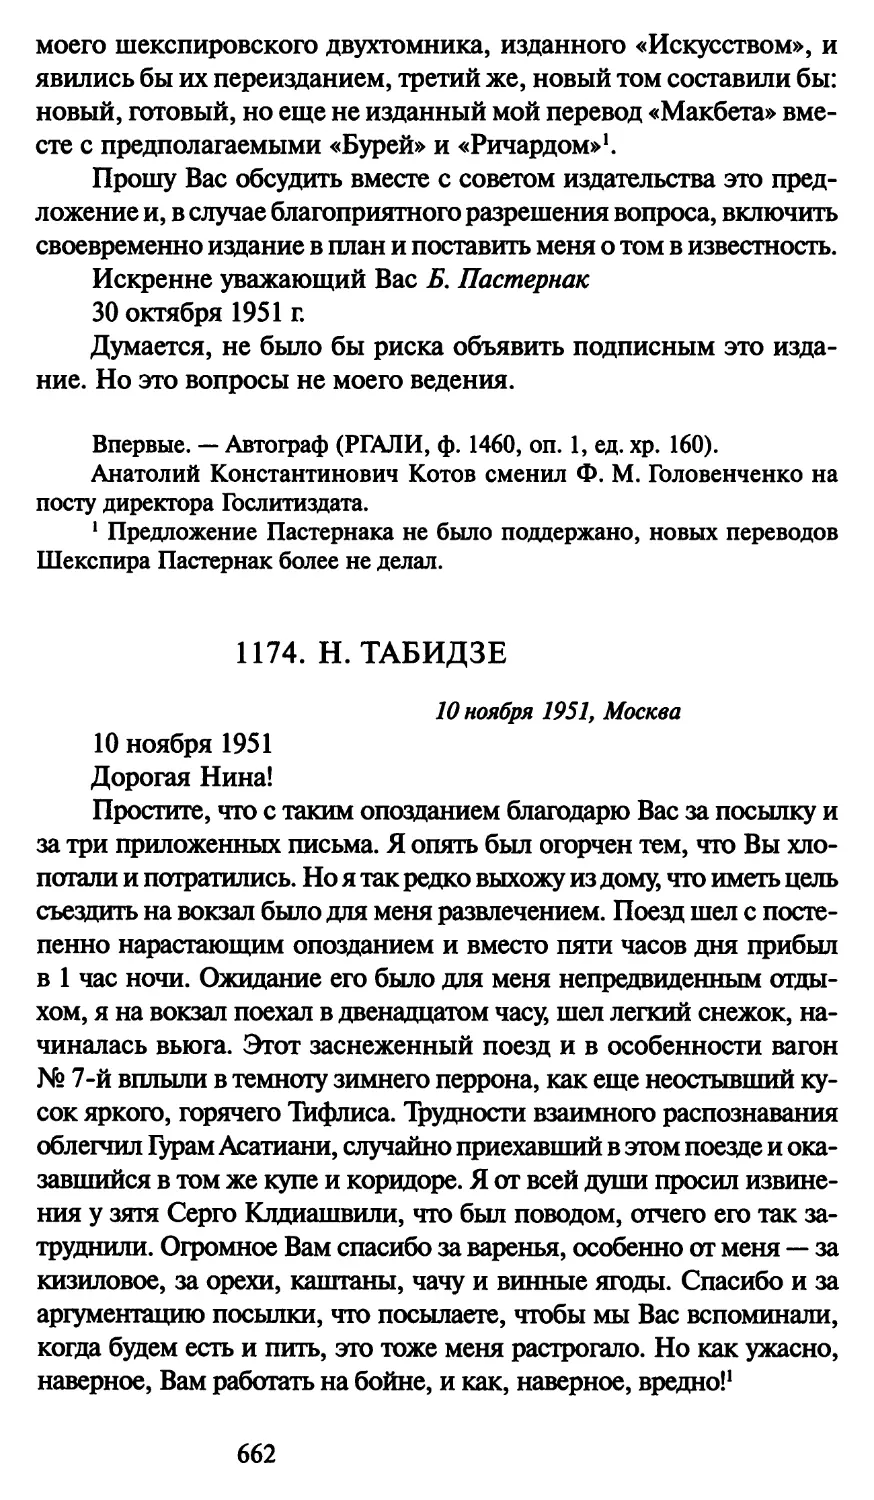 1174. Н. Табидзе 10 ноября 1951